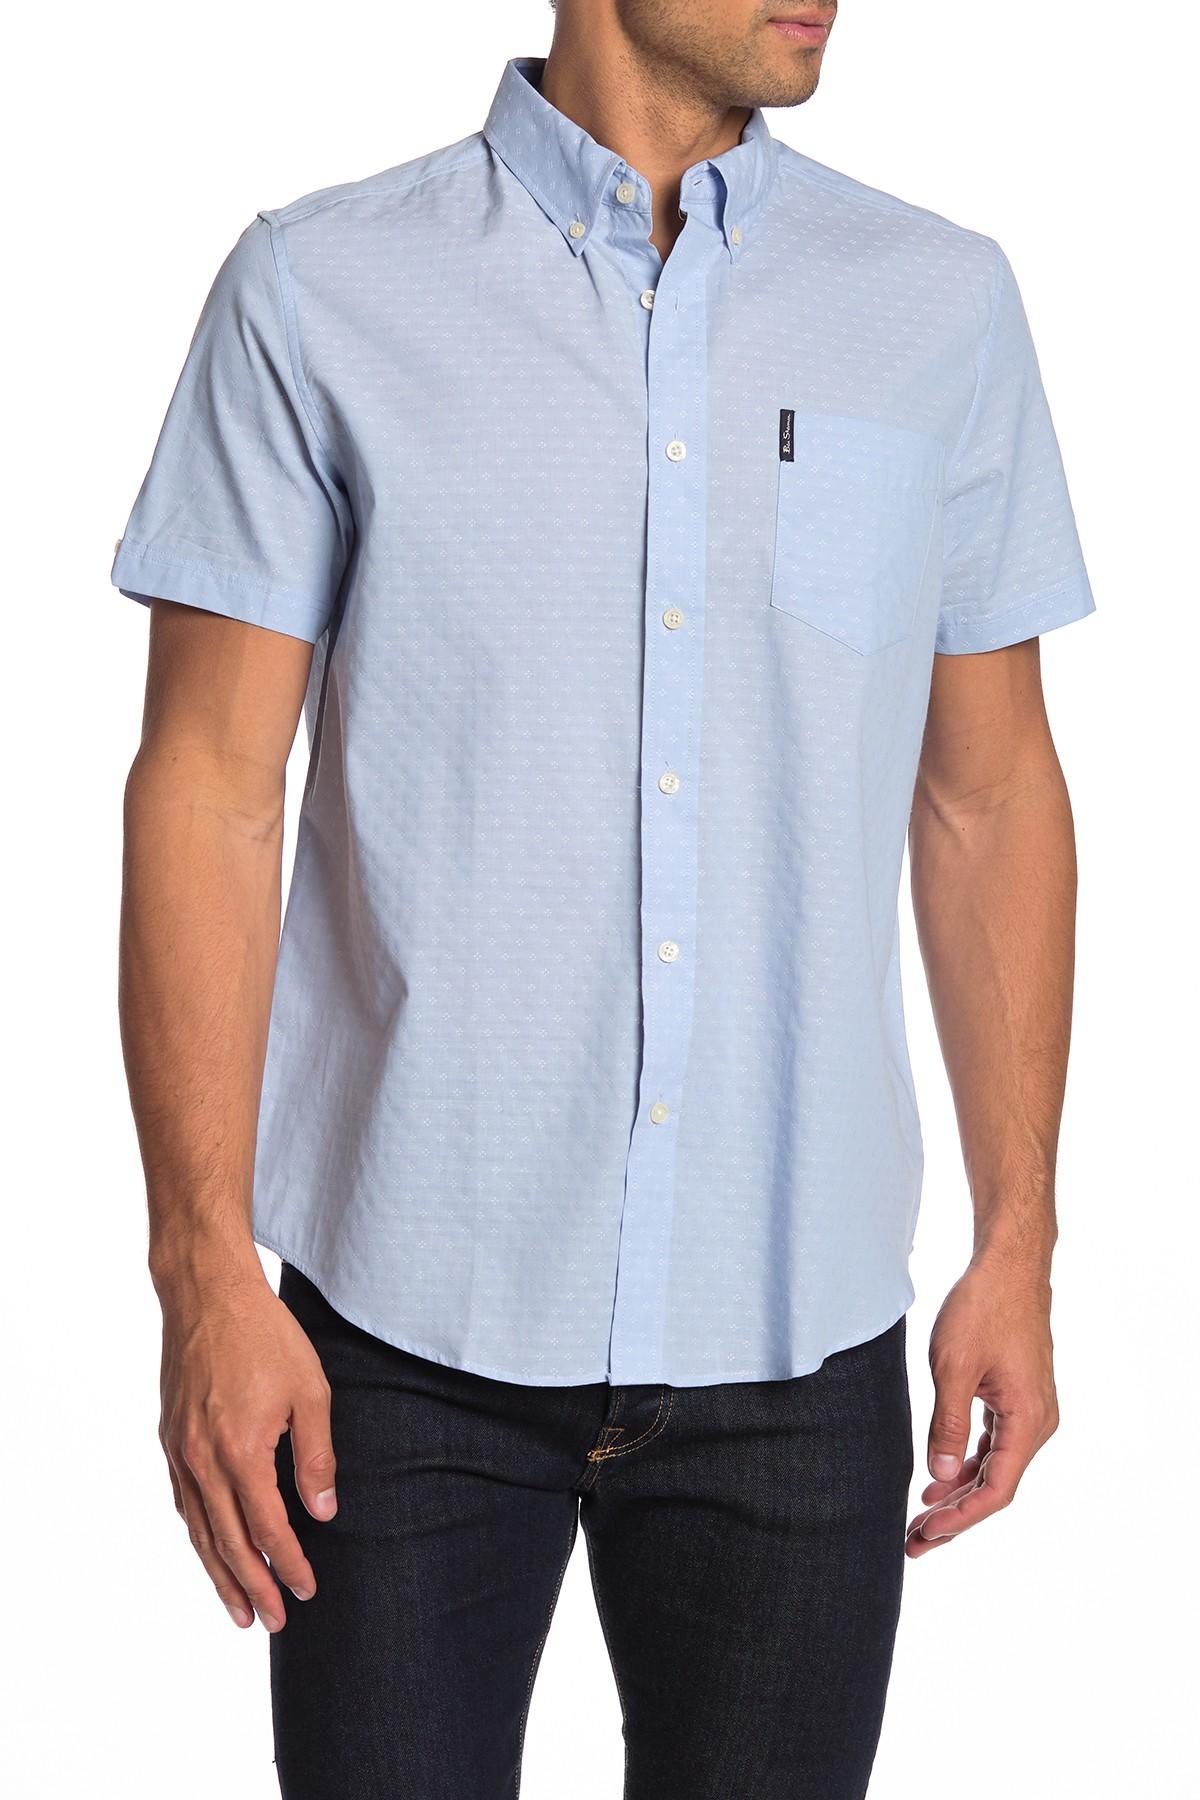 Ben Sherman Short Sleeve Dot Print Regular Fit Shirt in Blue for Men - Lyst